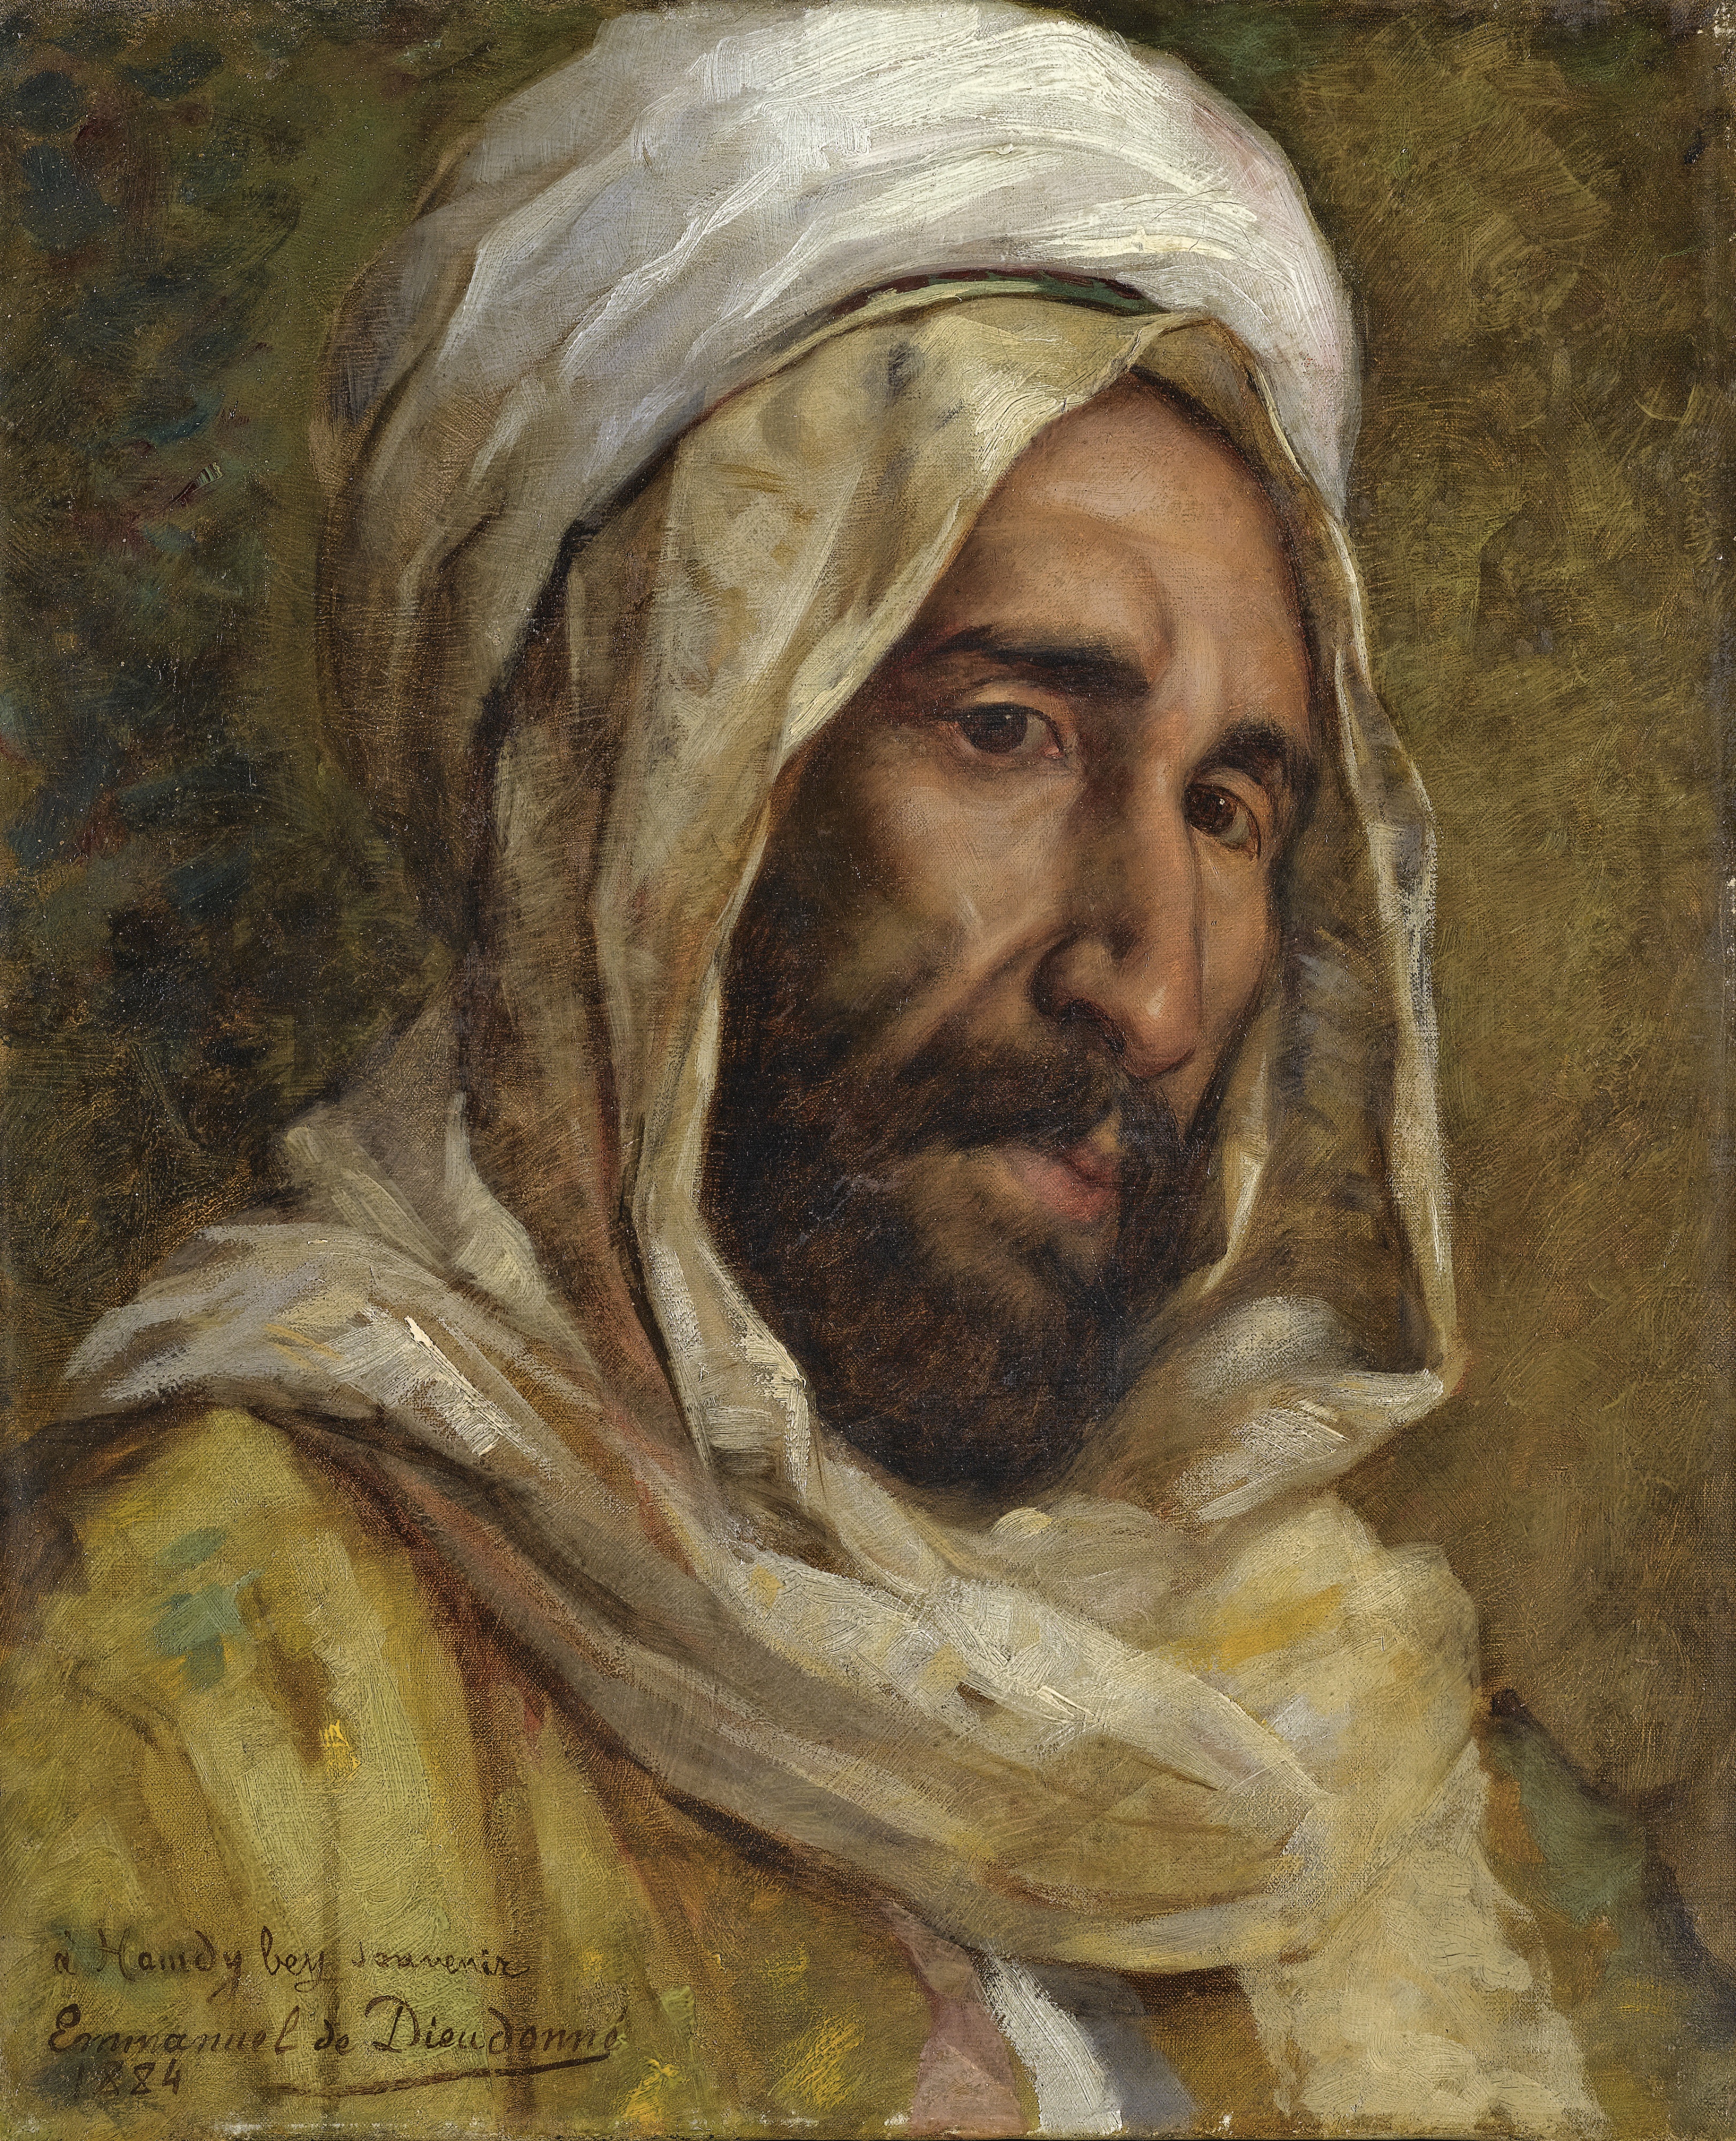 Osman Hamdi Bey - December 30, 1842 - February 24, 1910